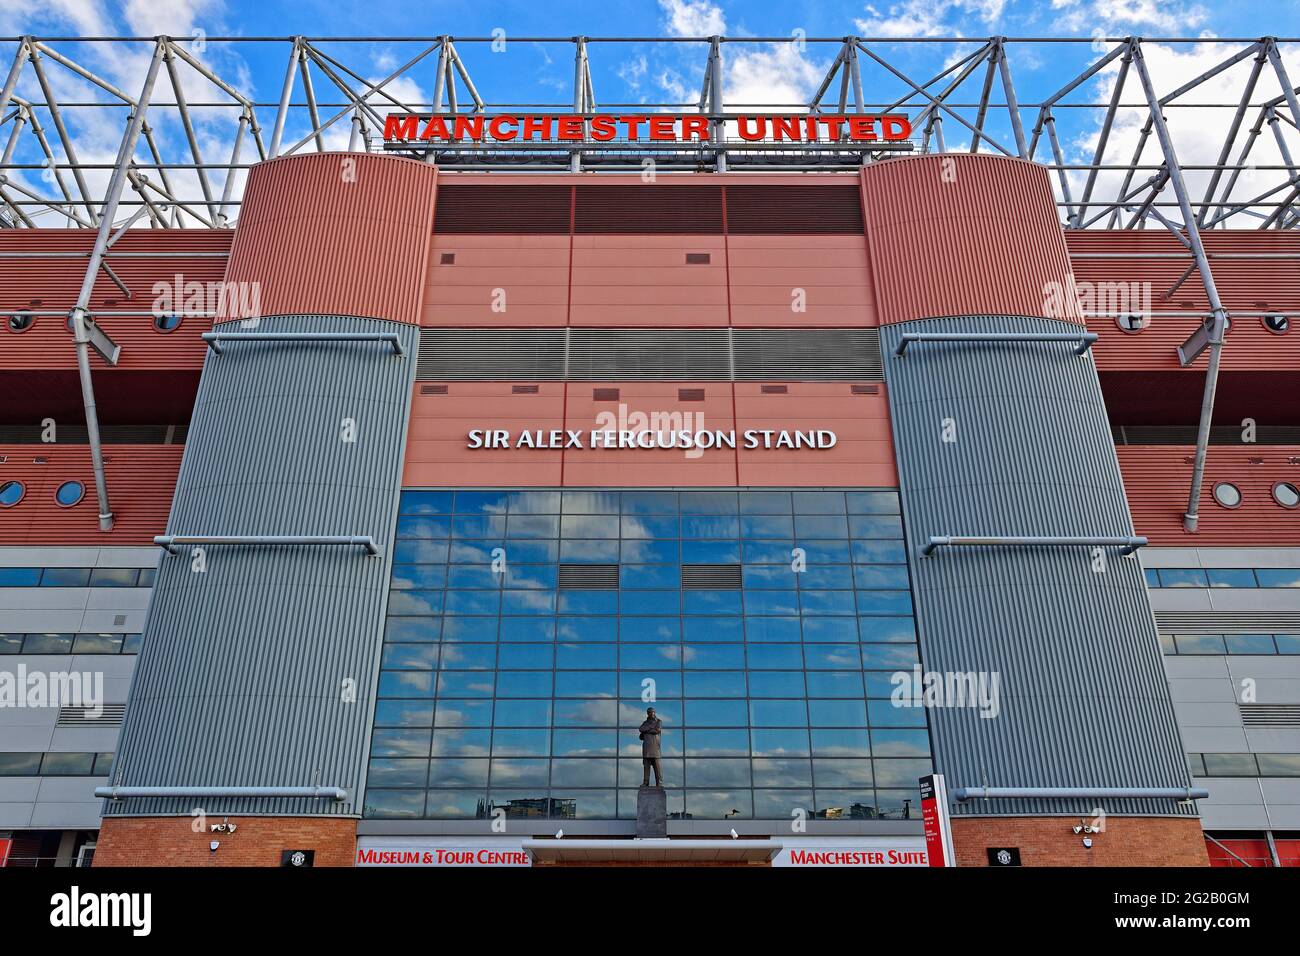 Sir Alex Ferguson Stand, Old Trafford Stadium, Home to Manchester United Football Club, England, United Kingdom Stock Photo